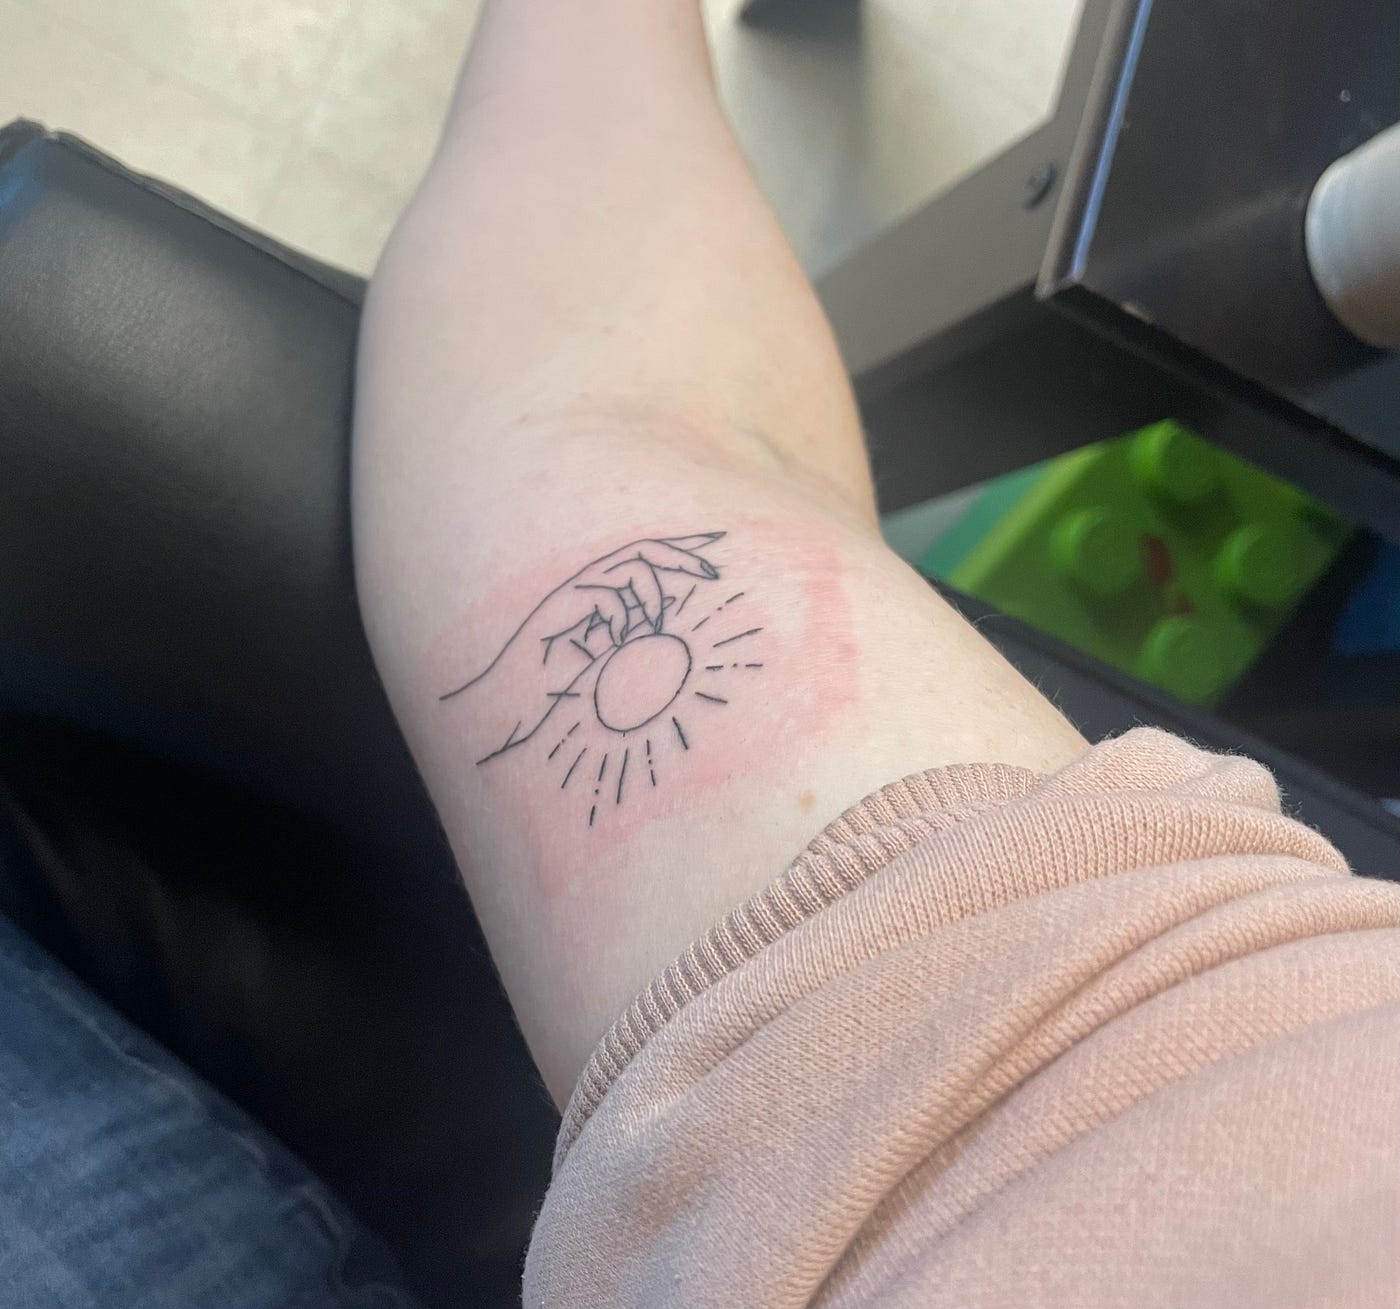 My terrible tattoo healing experience | by Dani Hendrix | Medium